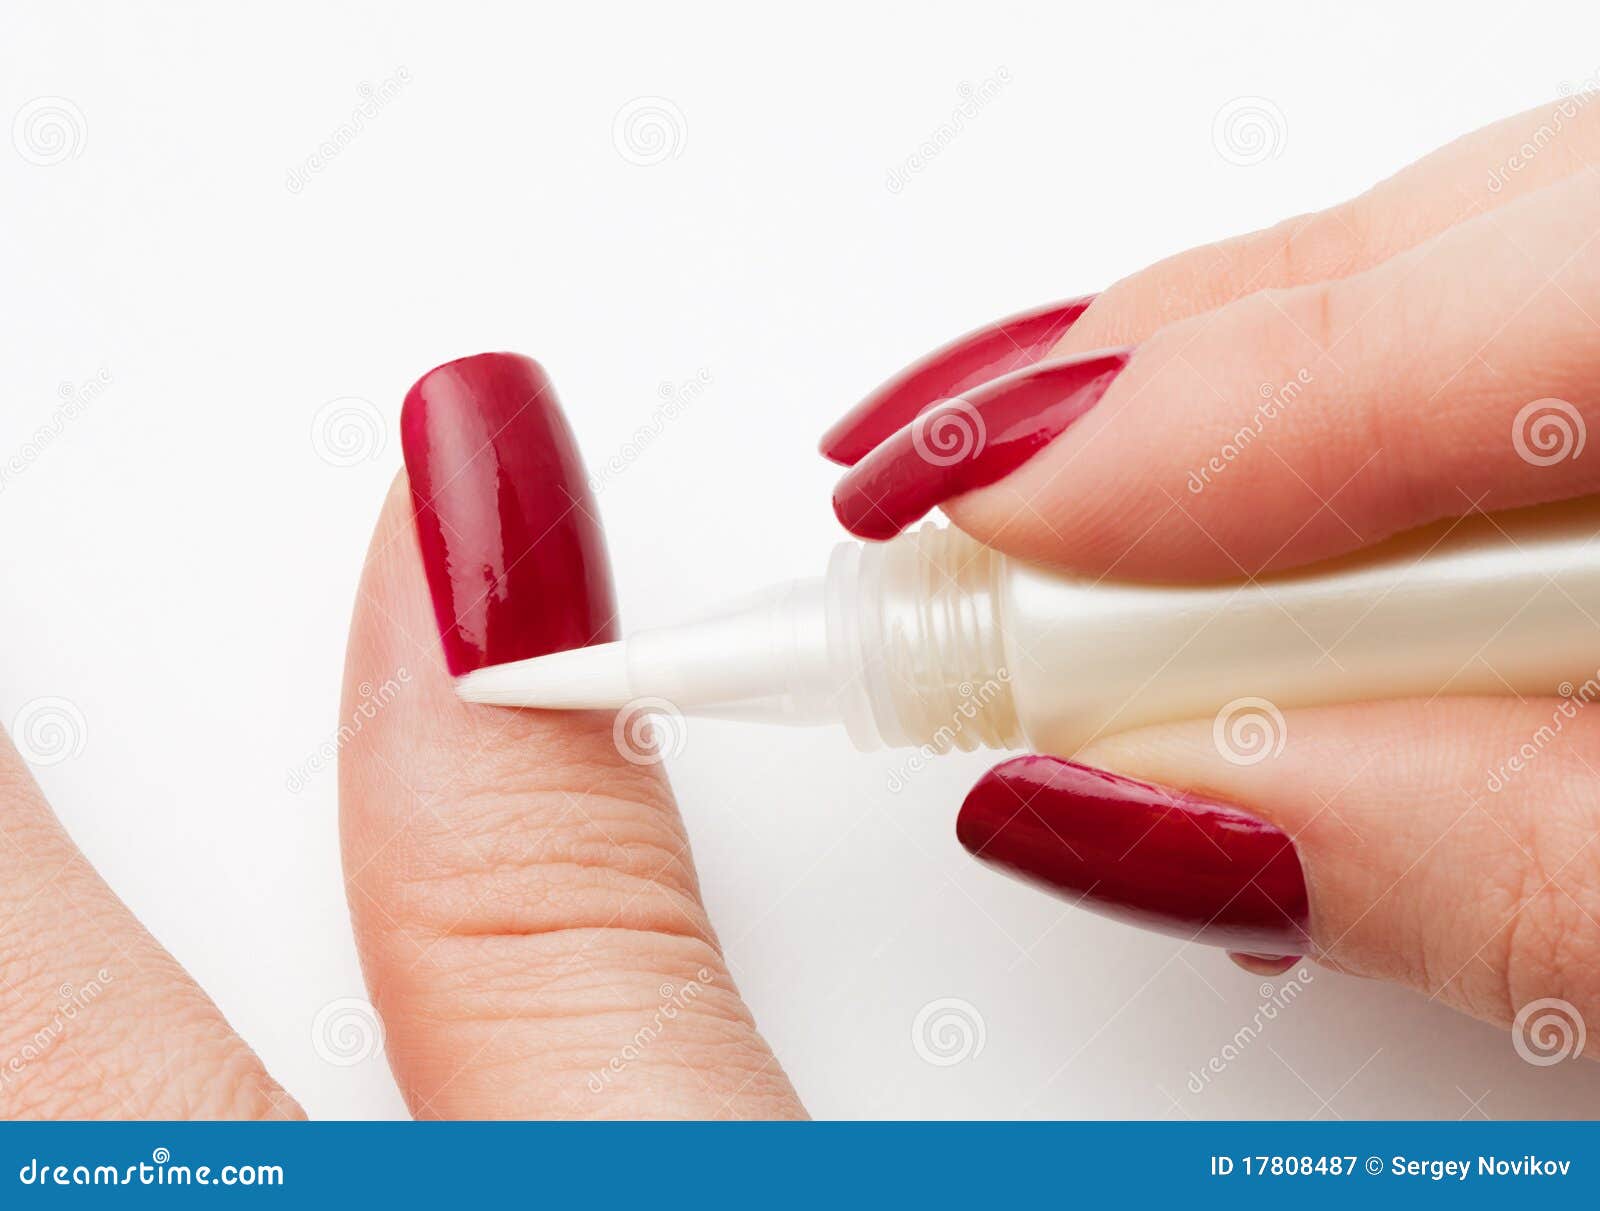 skin around nails (cuticle) care